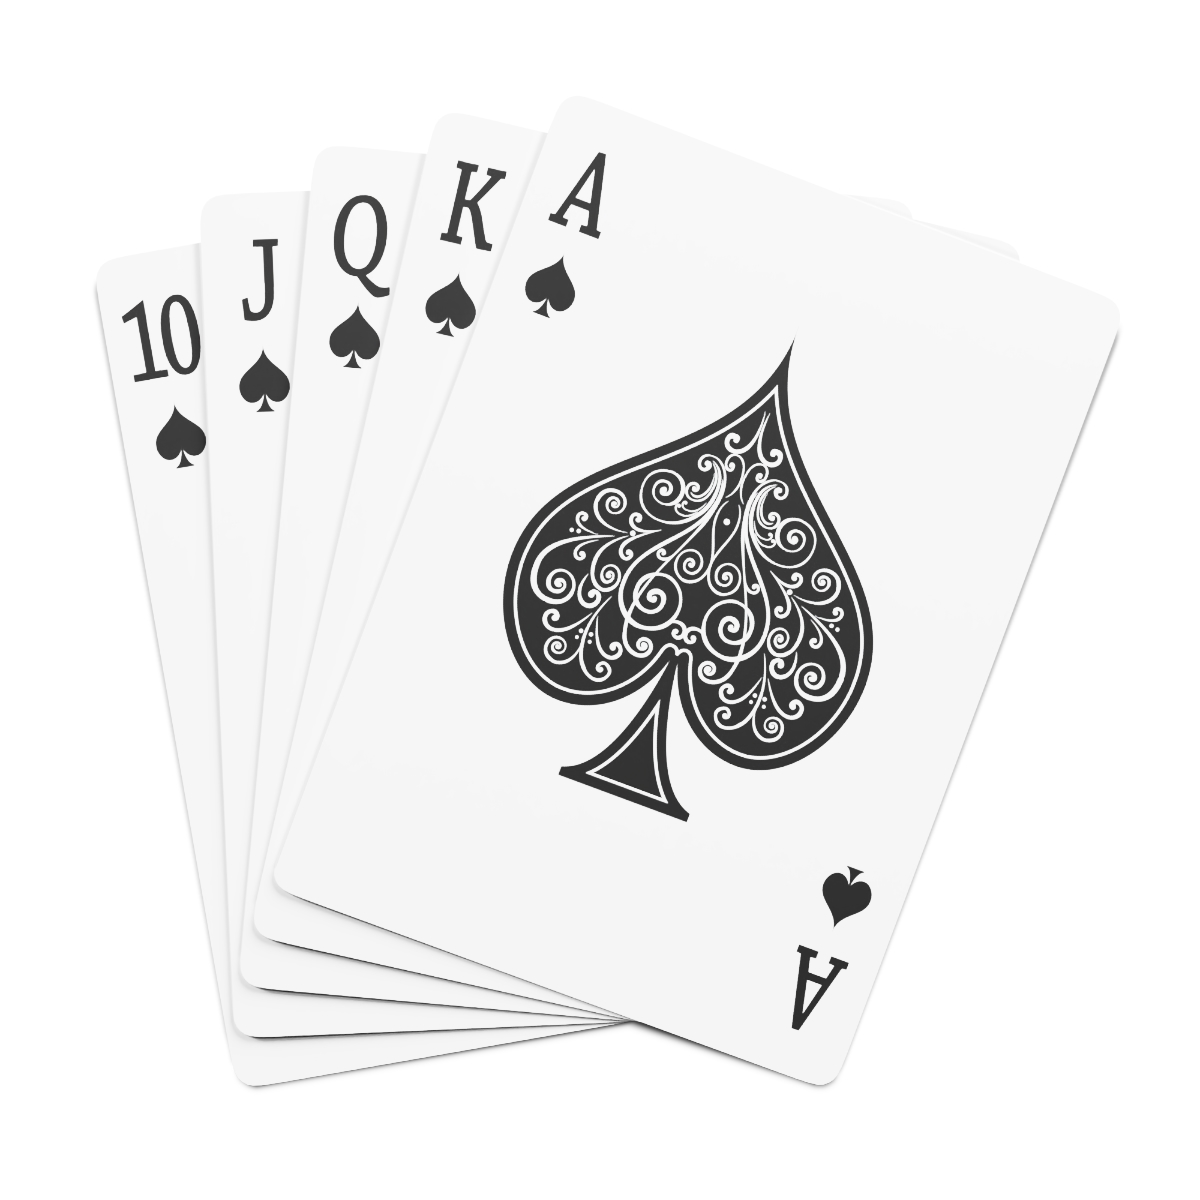 Dumpy Bear Goes to Russia - Custom Poker Cards product thumbnail image